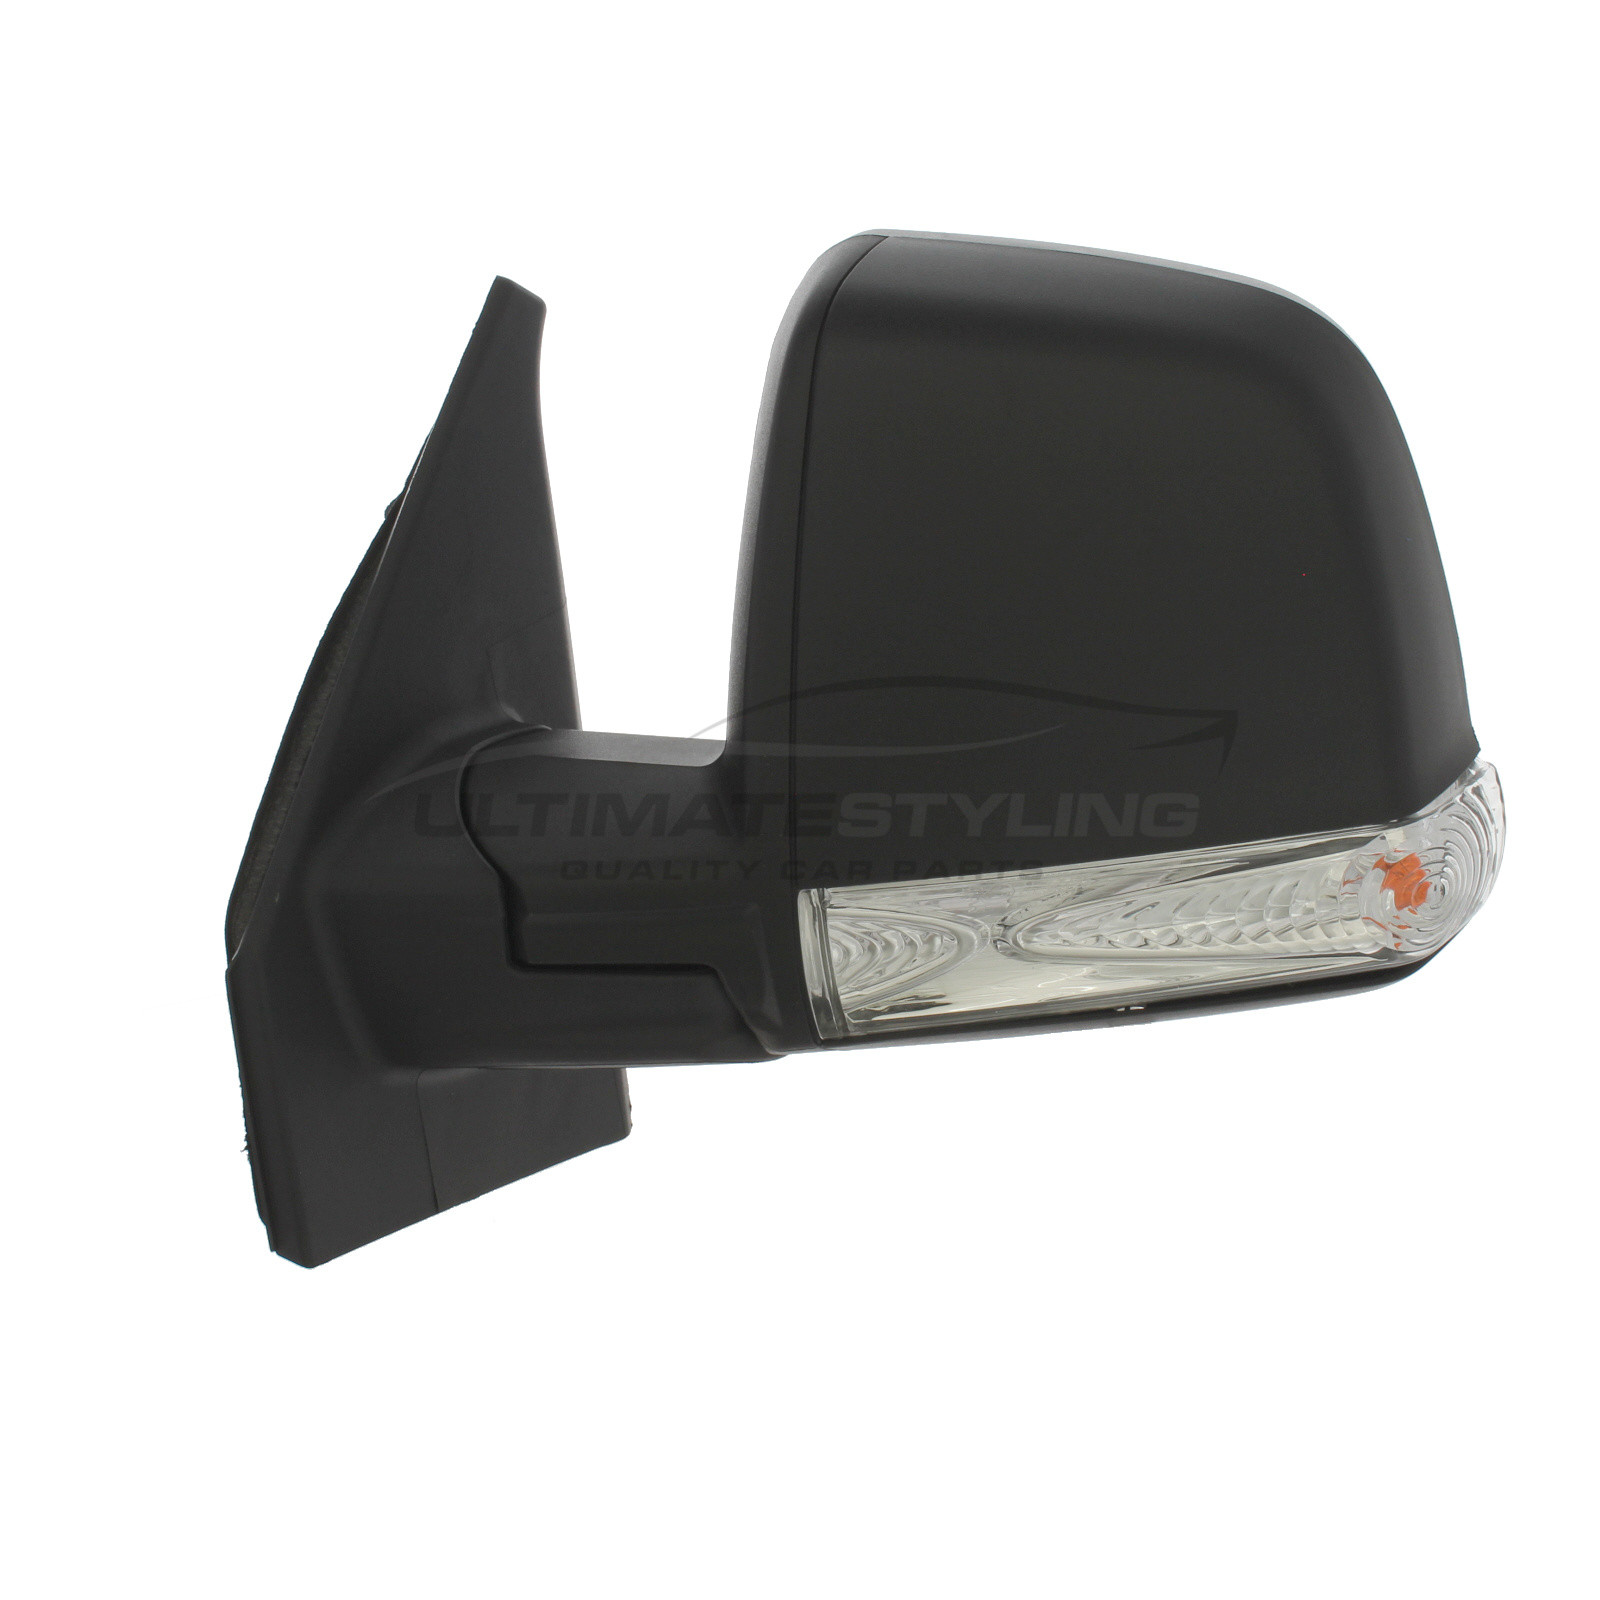 Fiat Doblo 2010> Wing Mirror / Door Mirror - Passenger Side (LH) - Cable adjustment - Indicator - Black